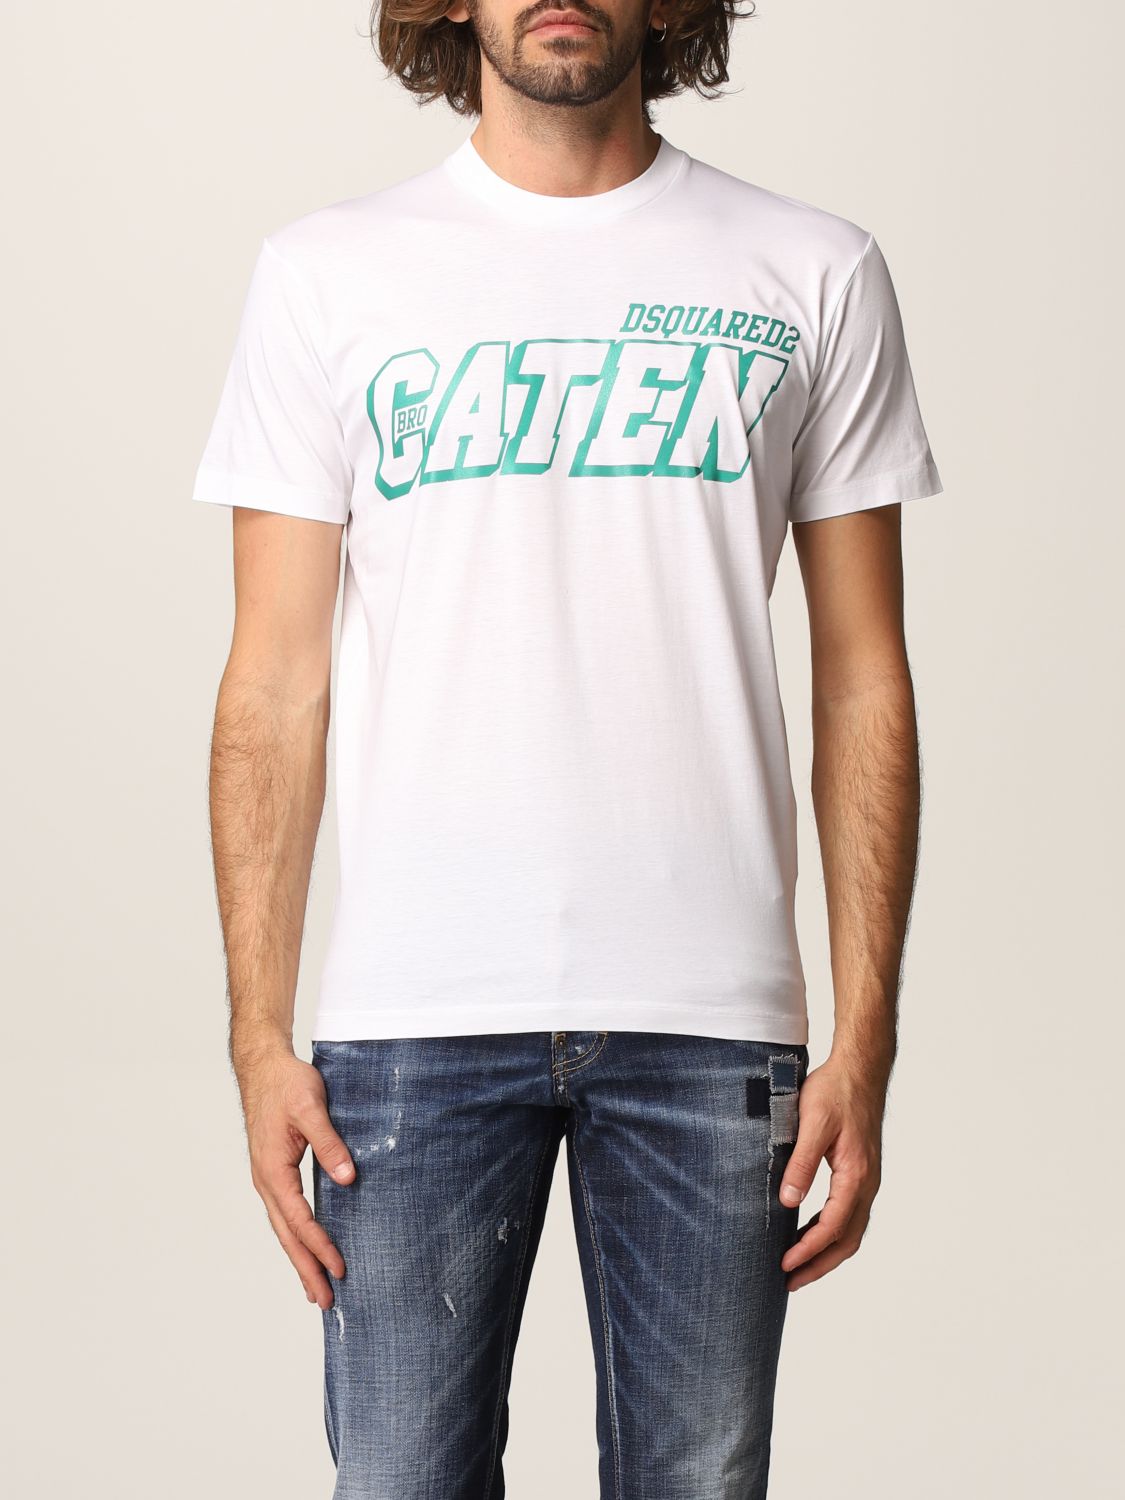 breng de actie modus vriendelijk DSQUARED2: T-shirt with Caten print - White | Dsquared2 t-shirt  S74GD0858S23009 online on GIGLIO.COM